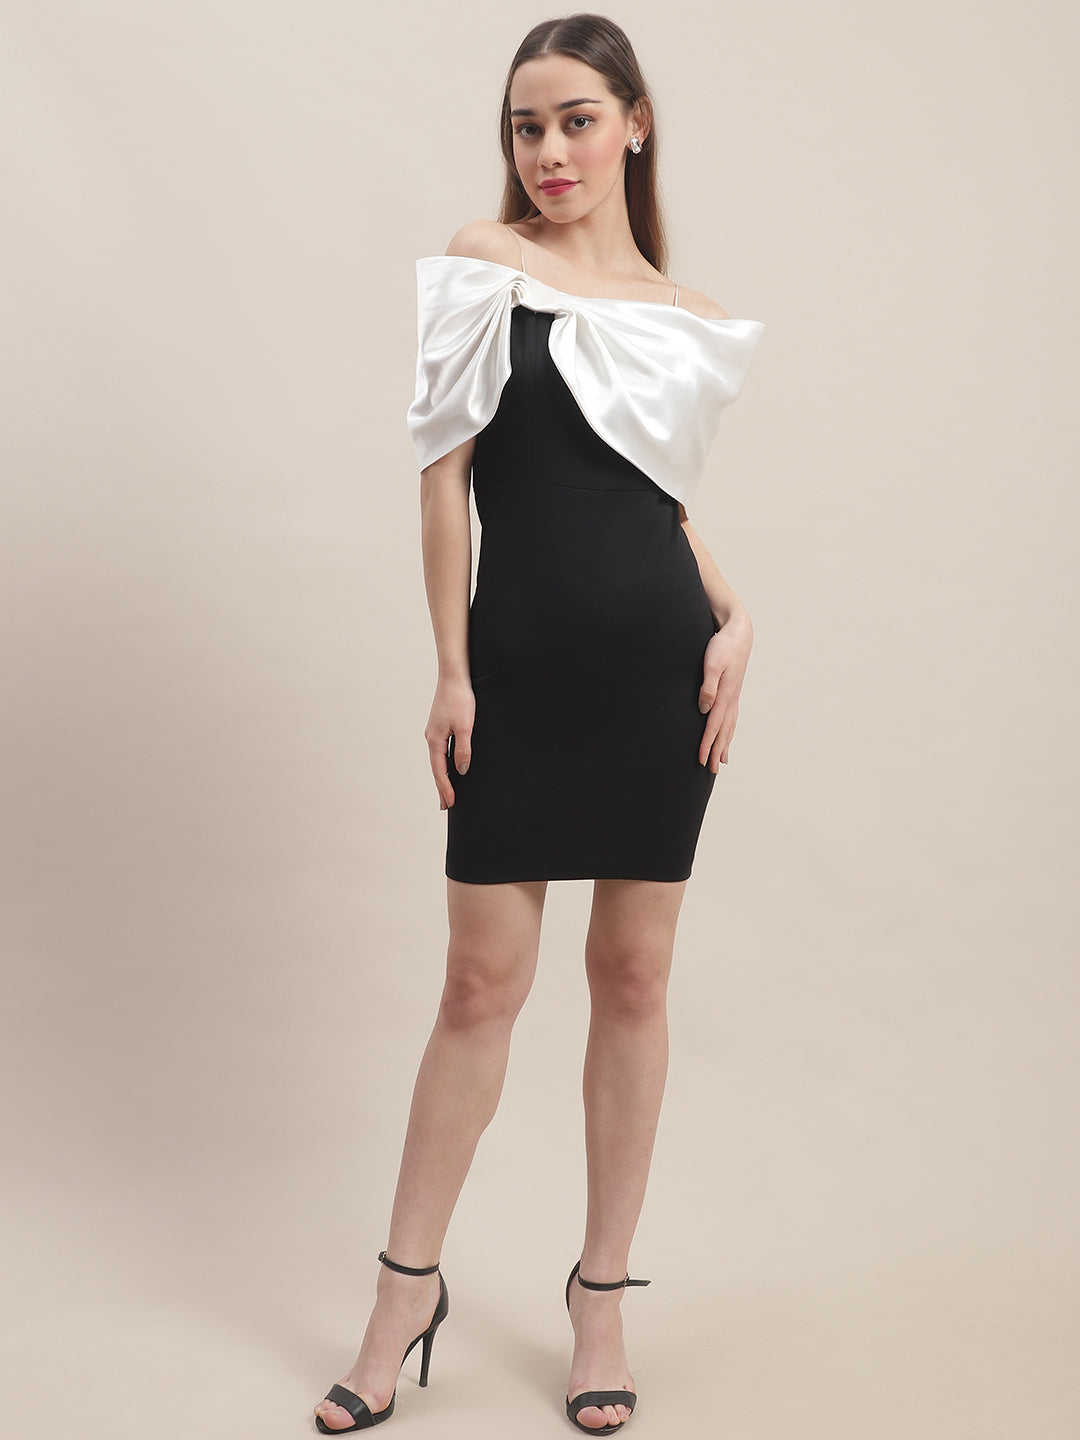 Blanc9 Black & White Bow Dress-B9DR149